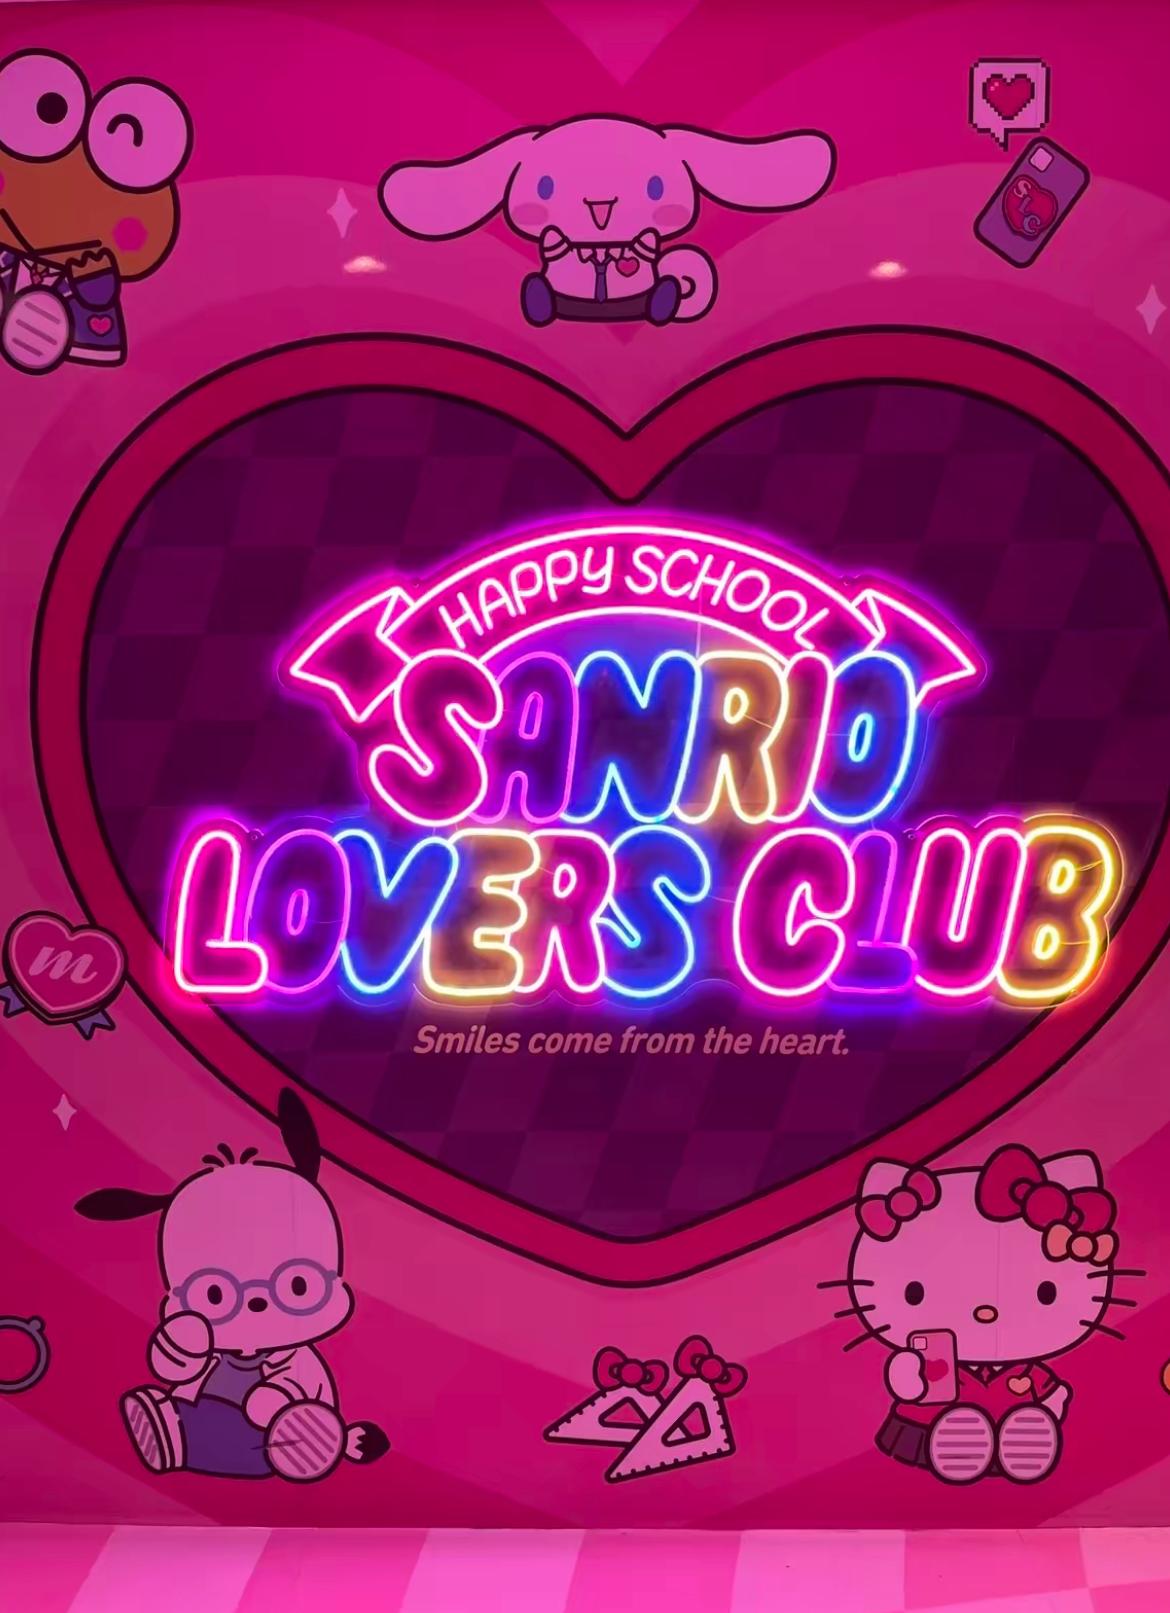 Explore Sanrio Lovers Club with Me!